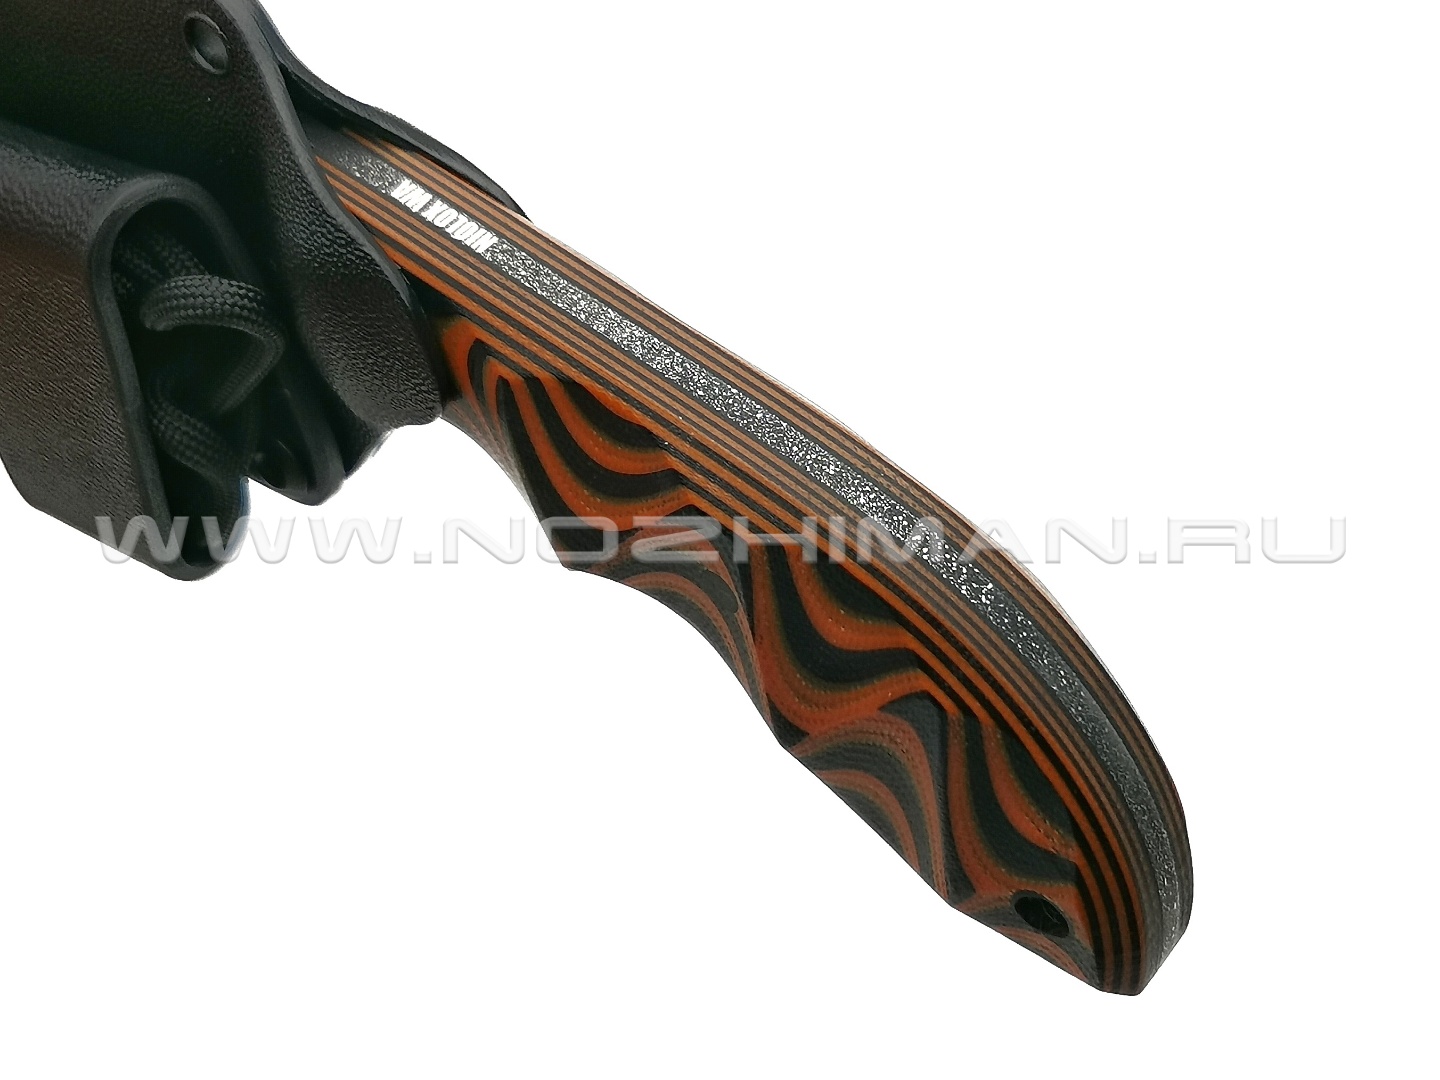 Волчий Век нож "Кондрат 10" сталь Niolox WA Дамаскаж, рукоять G10 black & orange